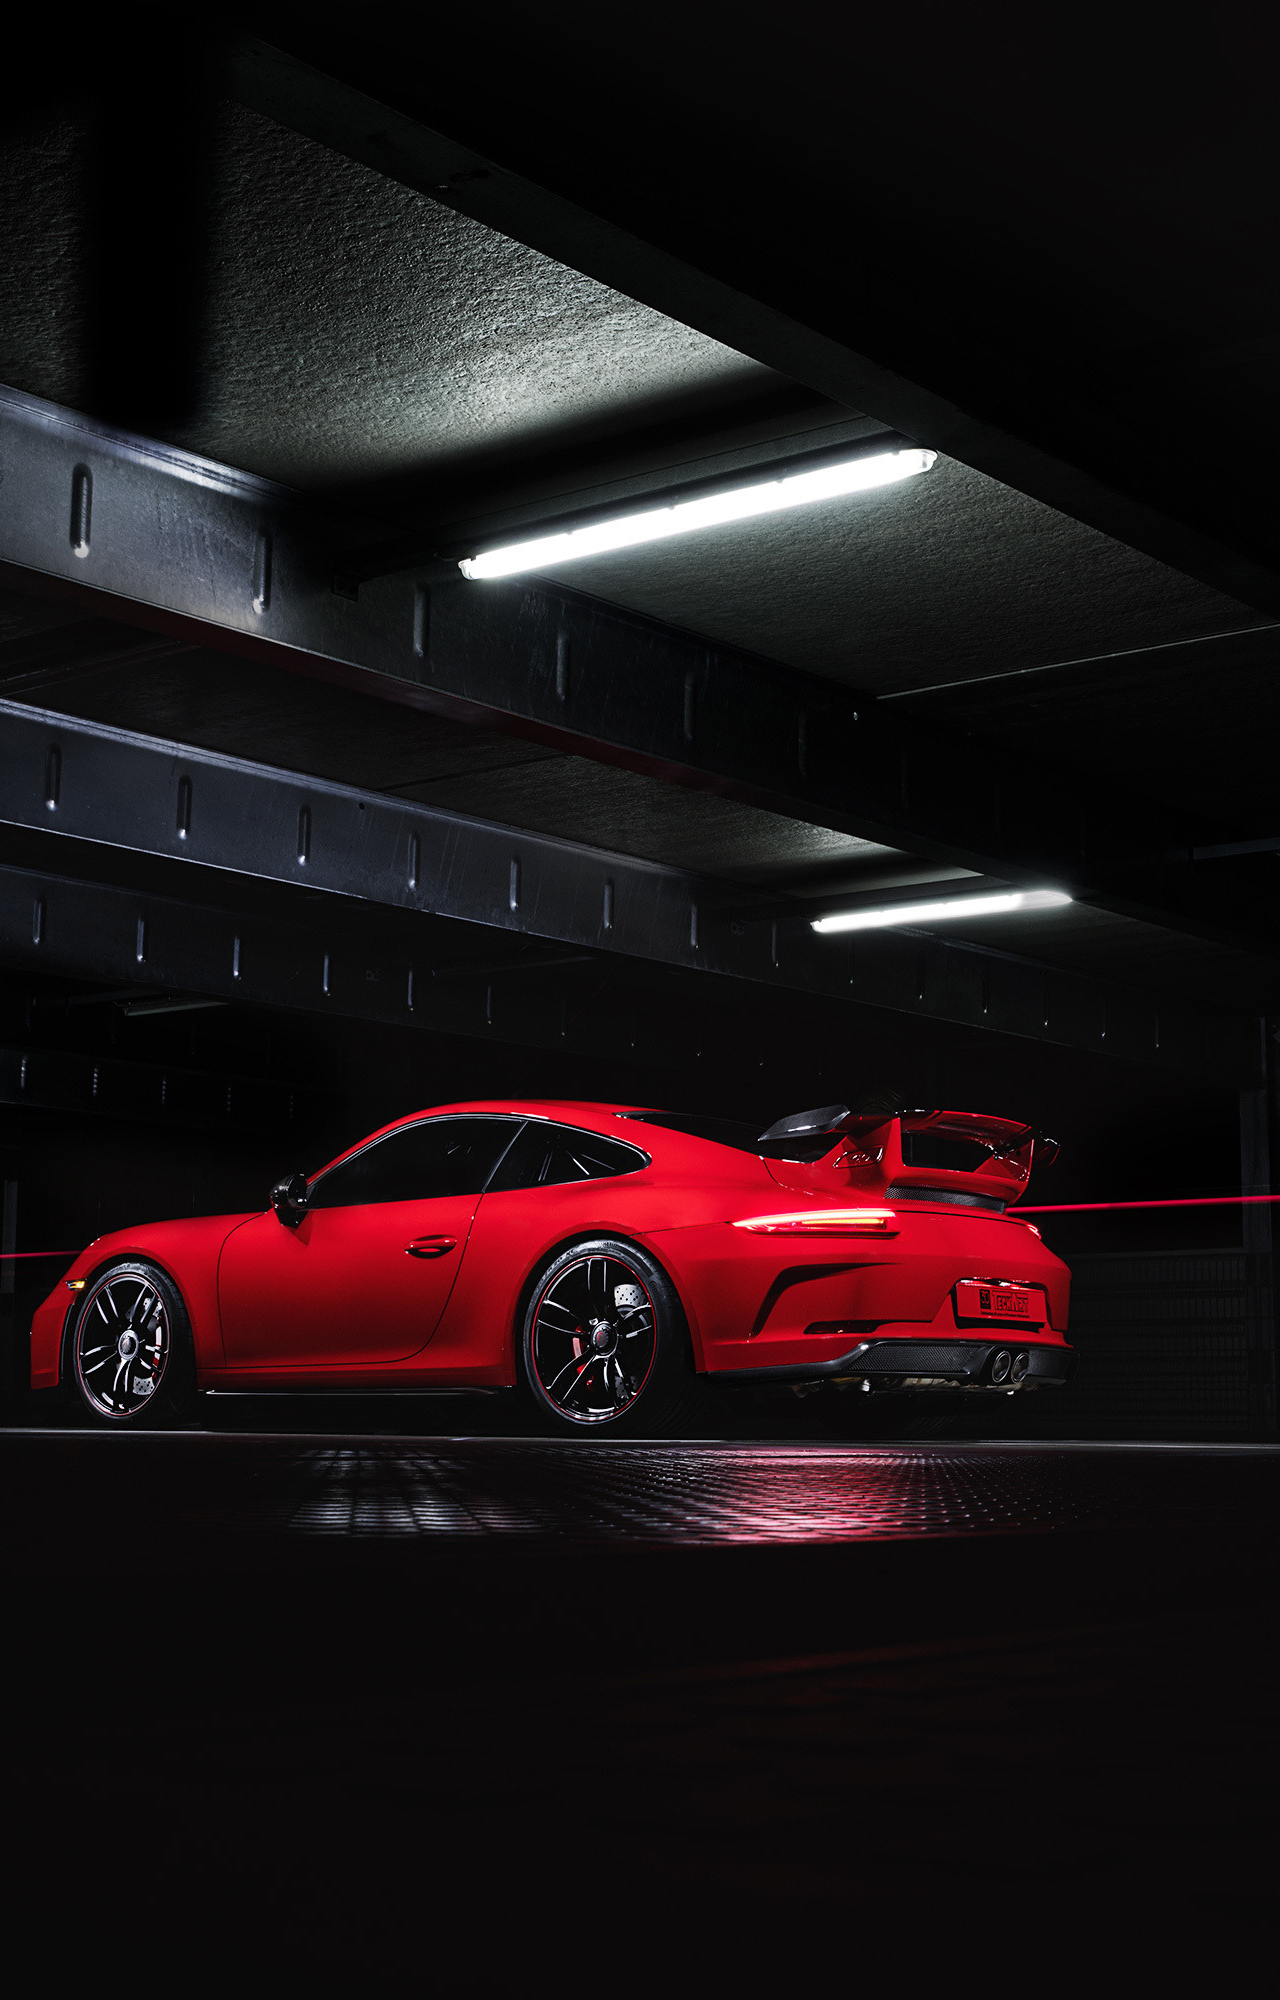 Download 1280x2120 Wallpaper Techart Porsche 911 Gt3 2018 Red Car Iphone 6 Plus 1280x2120 Hd Image Background 2129